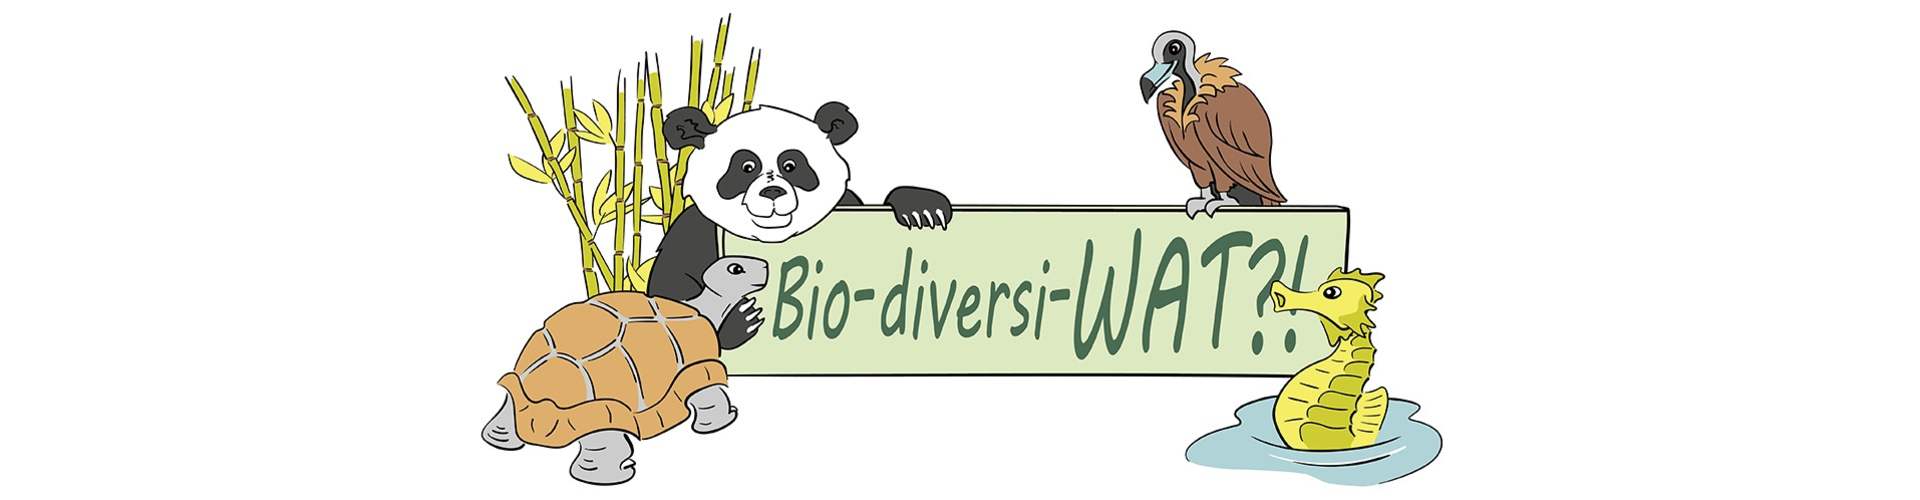 banner Bio-diversi-WAT?! Nieuwsbericht